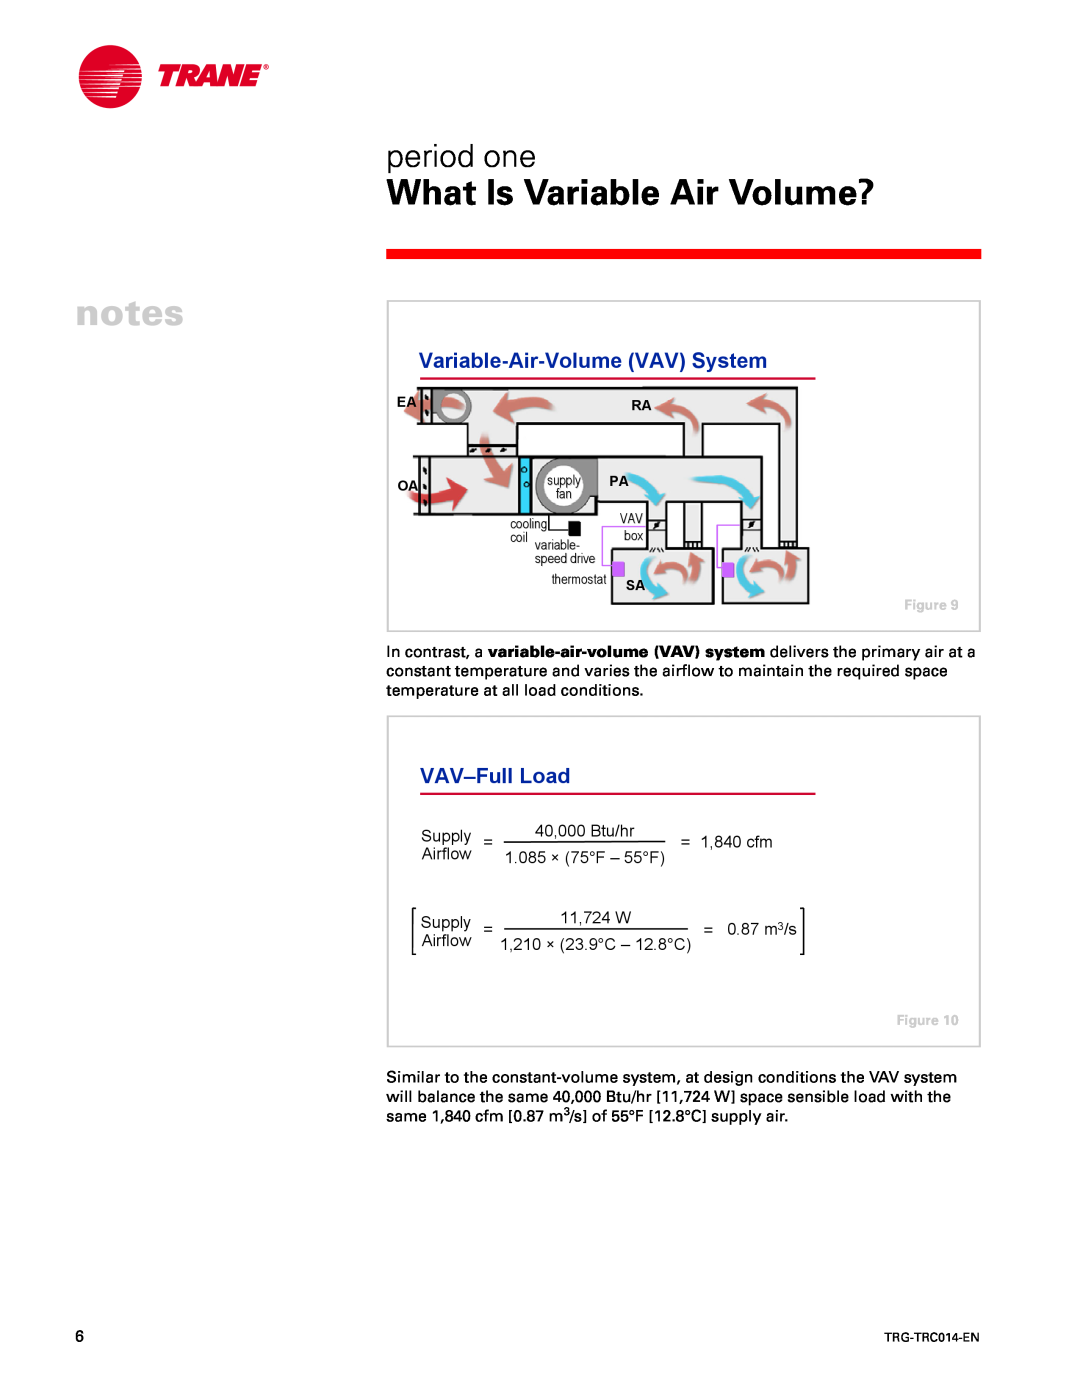 Trane TRG-TRC014-EN manual Variable-Air-VolumeVAV System, VAV-FullLoad, What Is Variable Air Volume?, period one 